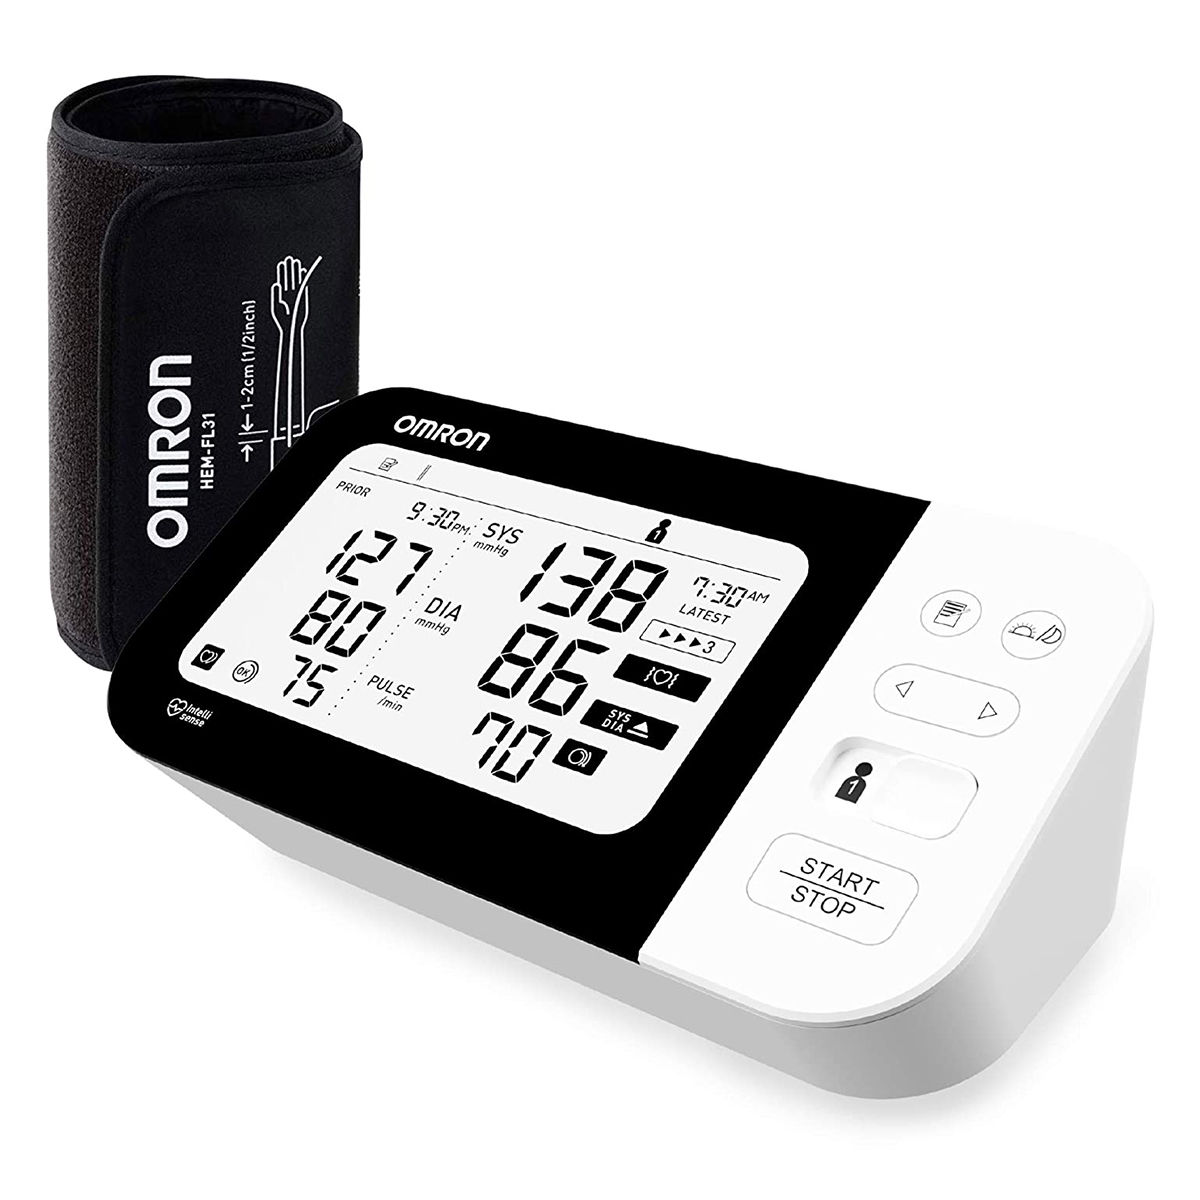 Buy Omron HEM 7361T Bluetooth Digital Blood Pressure Monitor with AFib Indicator, 1 Count Online